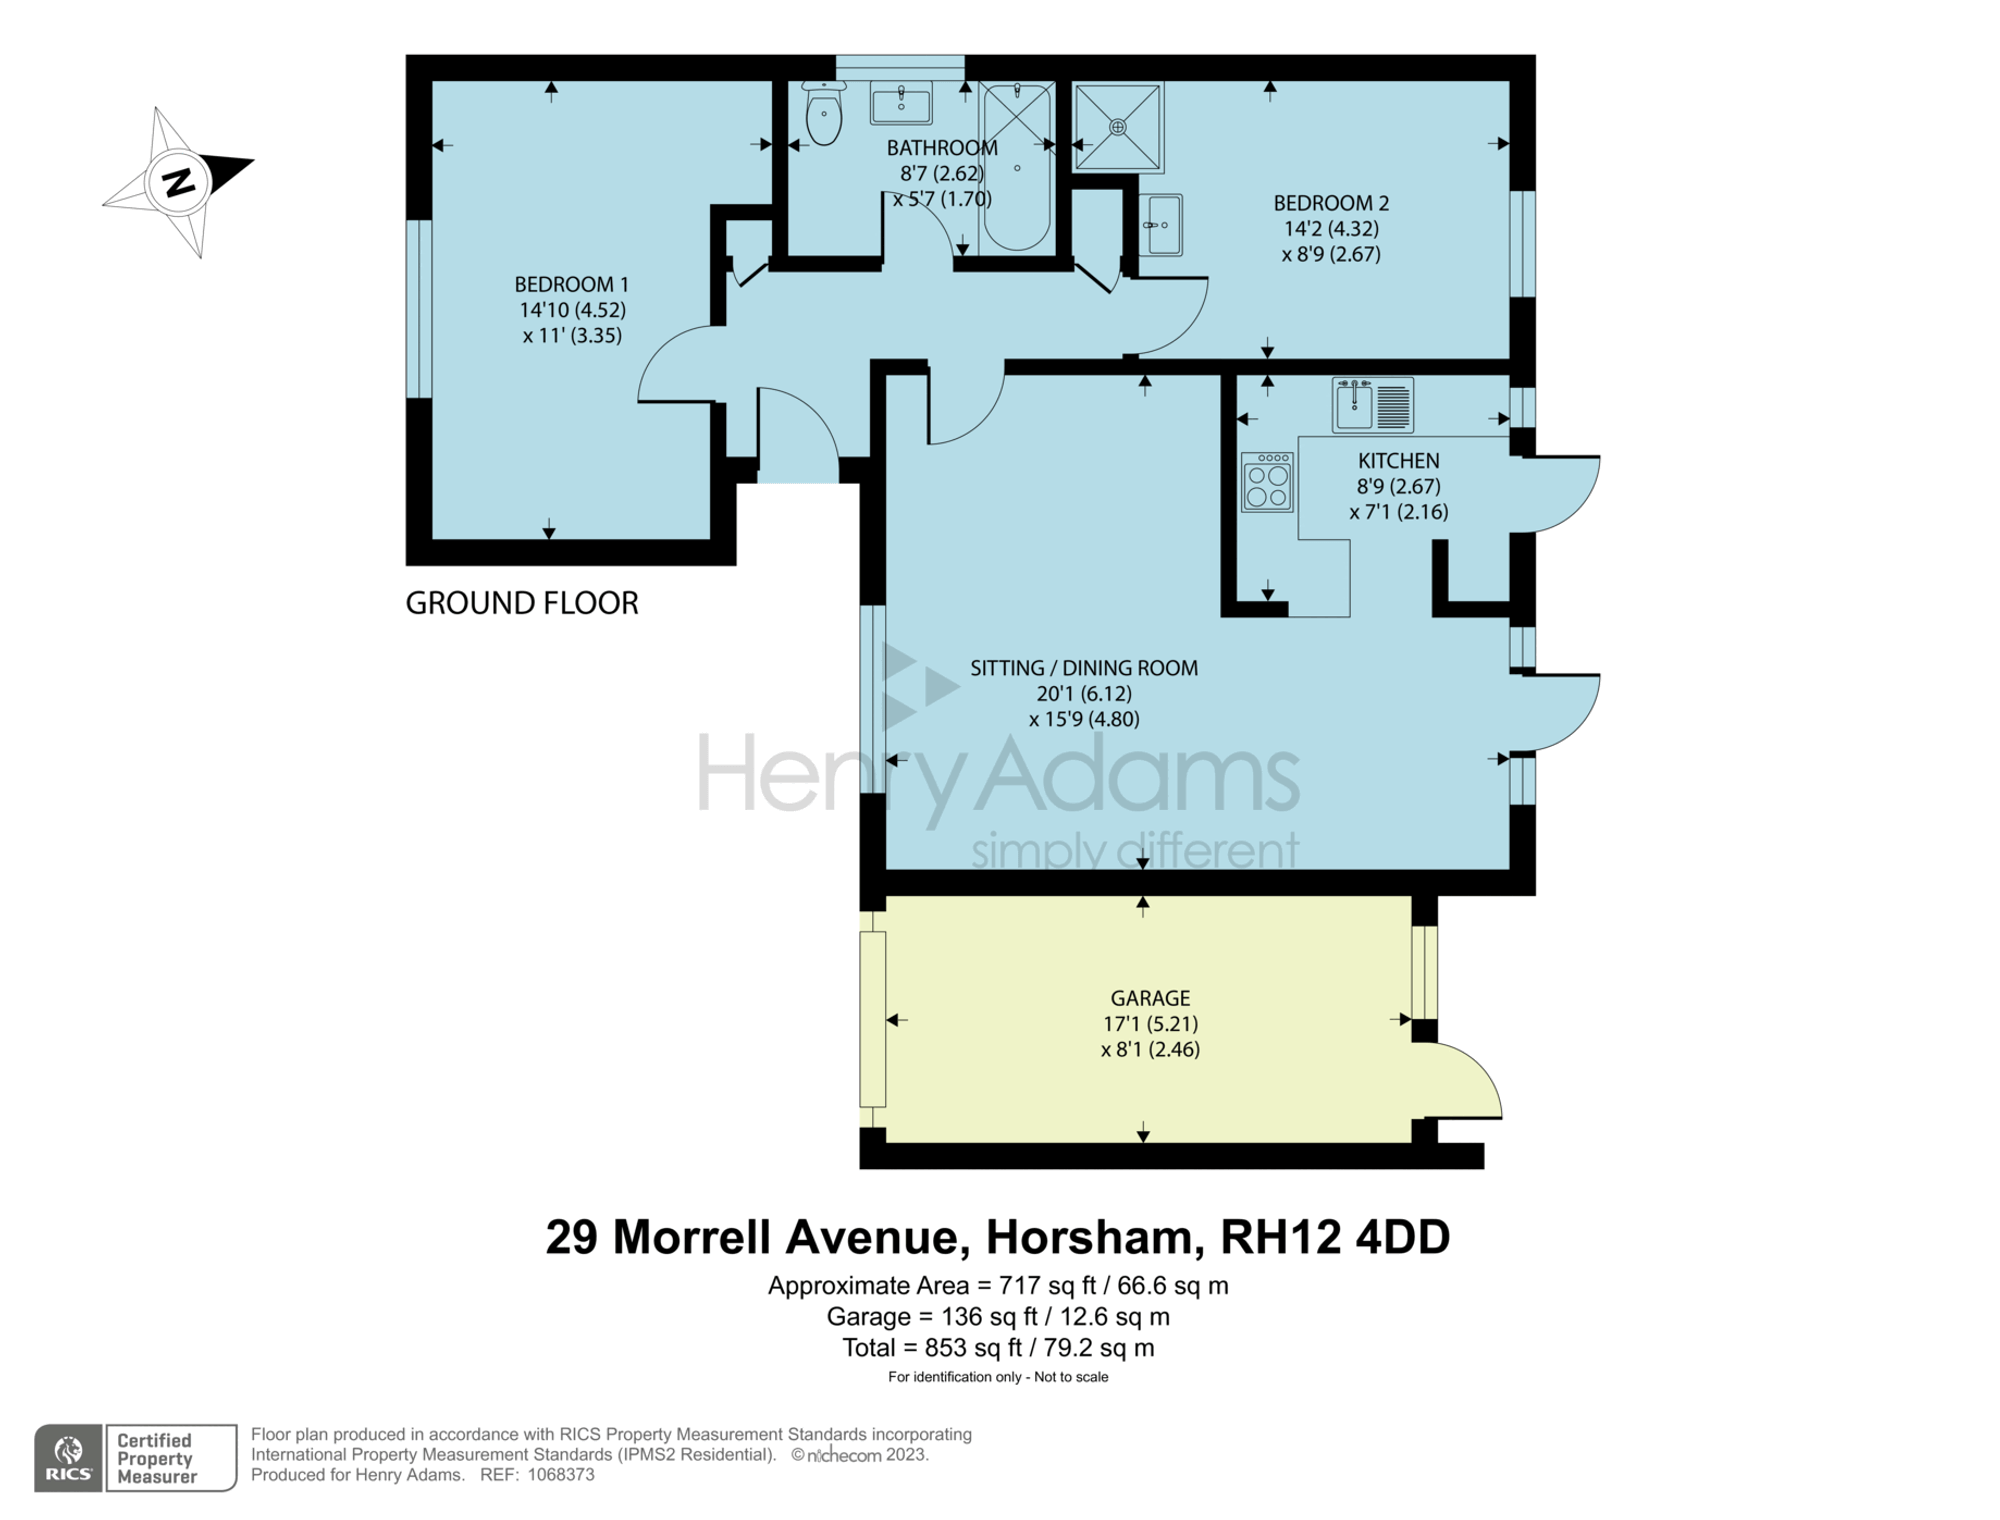 Morrell Avenue, Horsham, RH12 floorplans